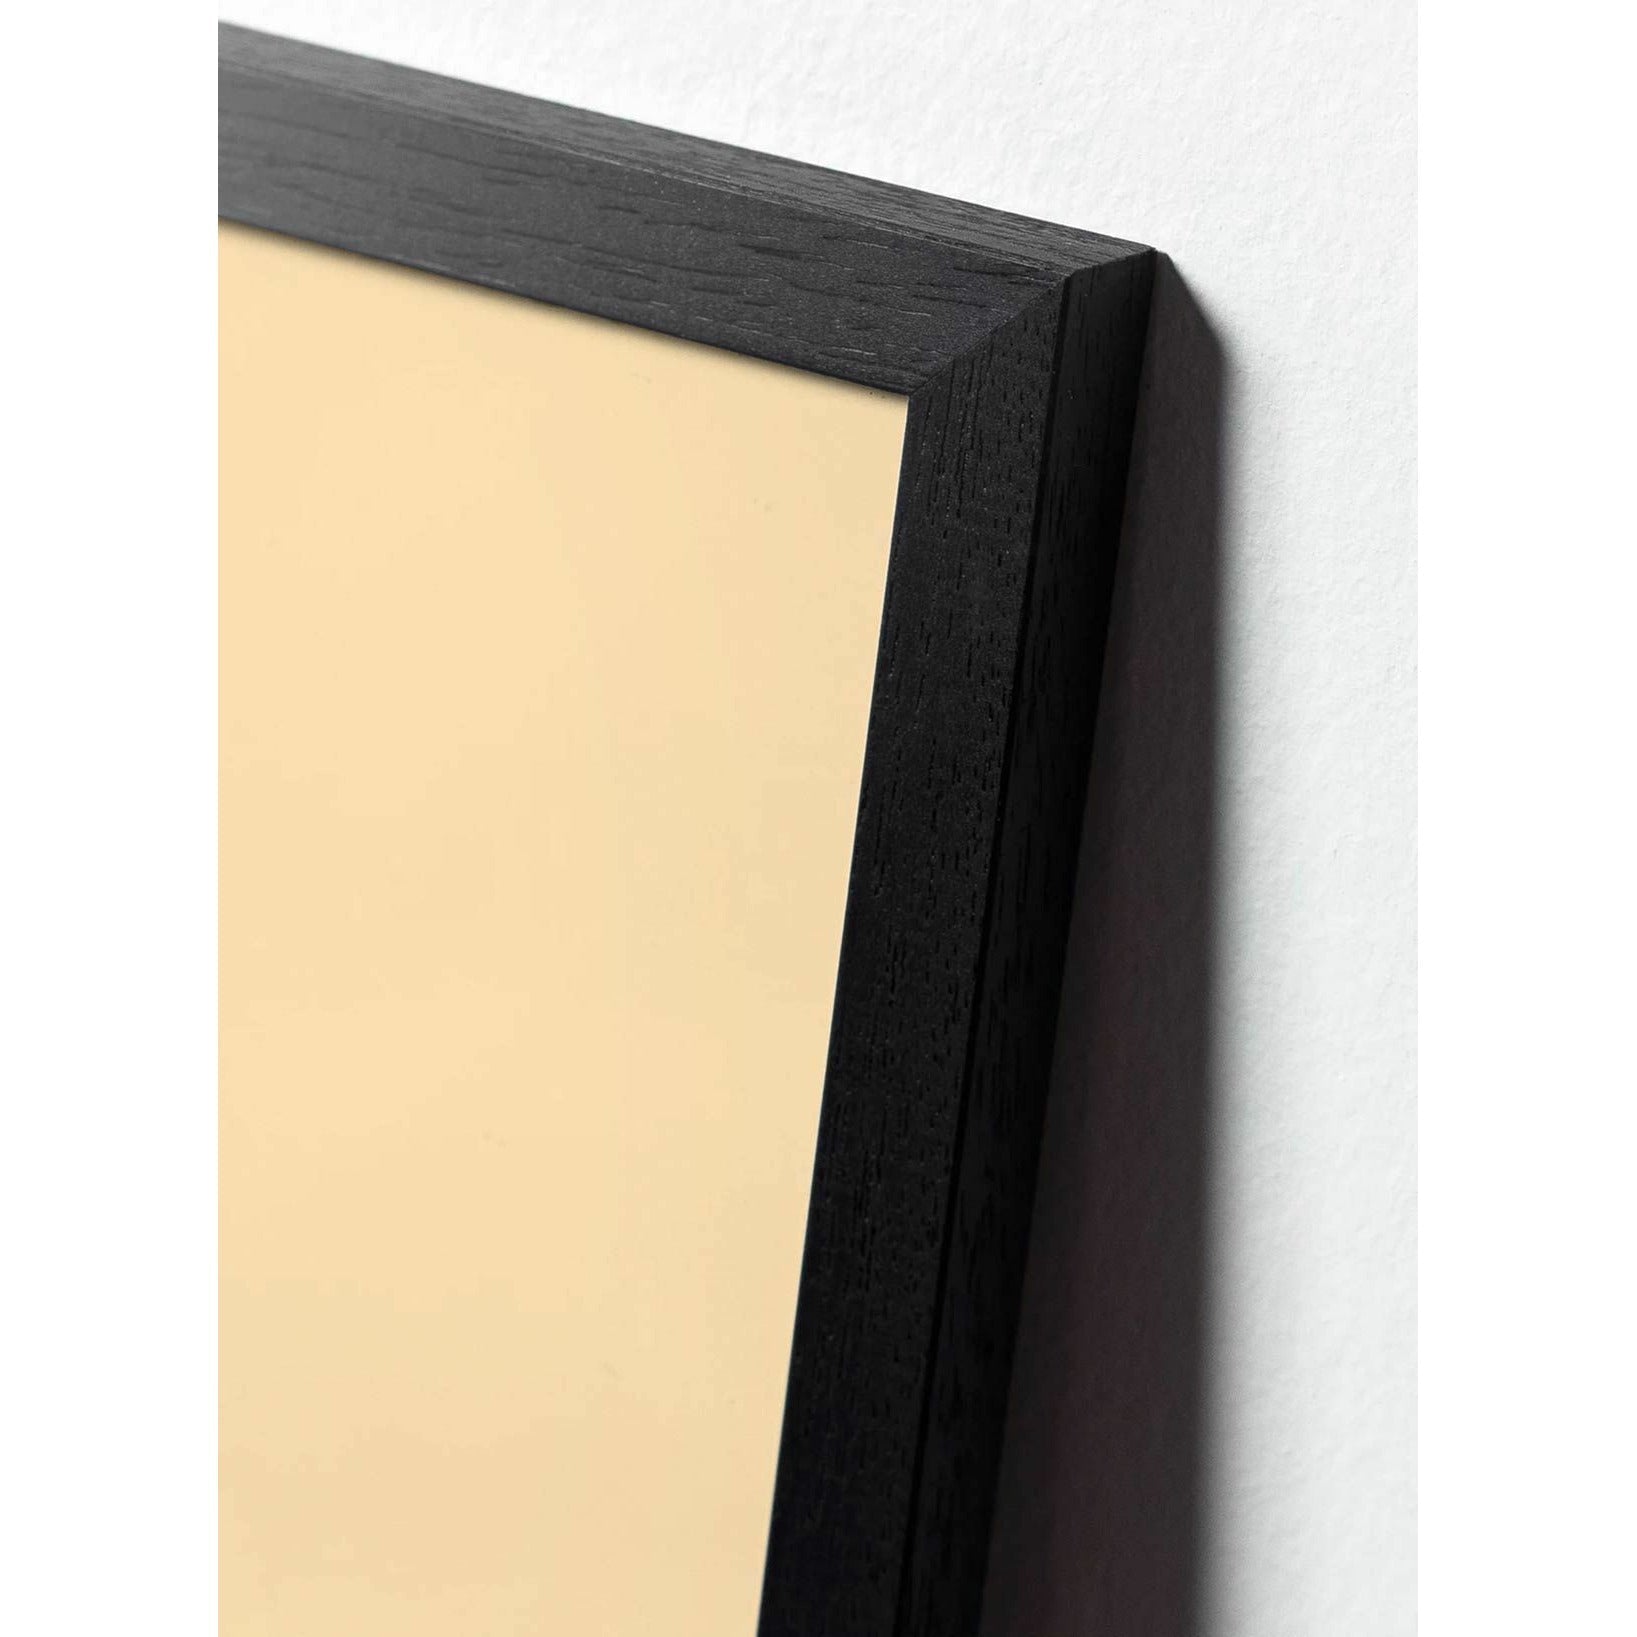 Póster de línea de caída de ideas, marco en madera lacada negra 30x40 cm, fondo blanco